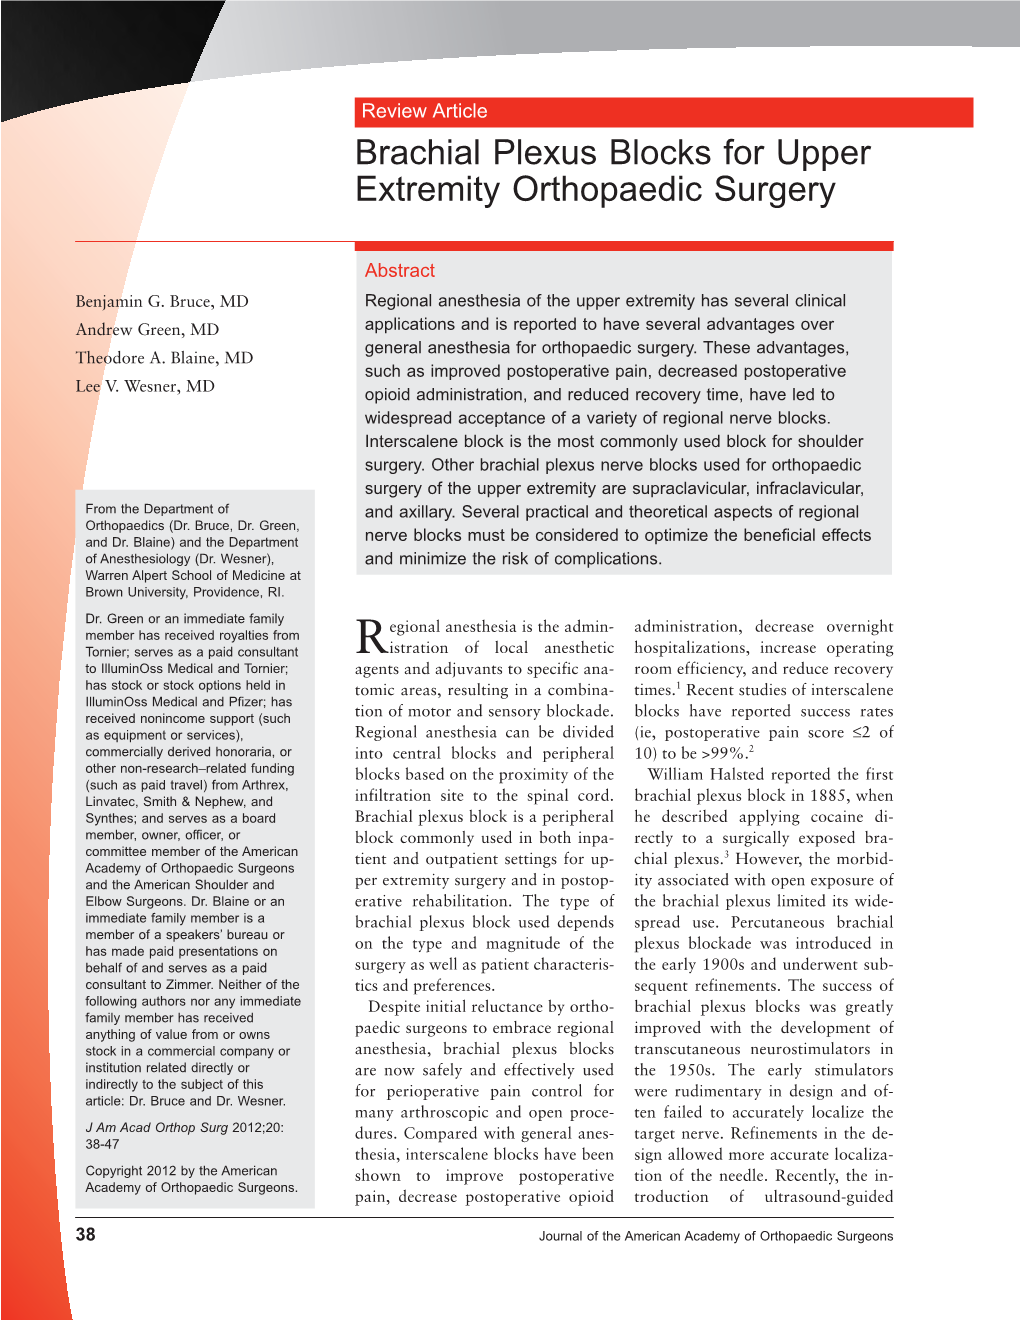 Brachial Plexus Blocks for Upper Extremity Orthopaedic Surgery